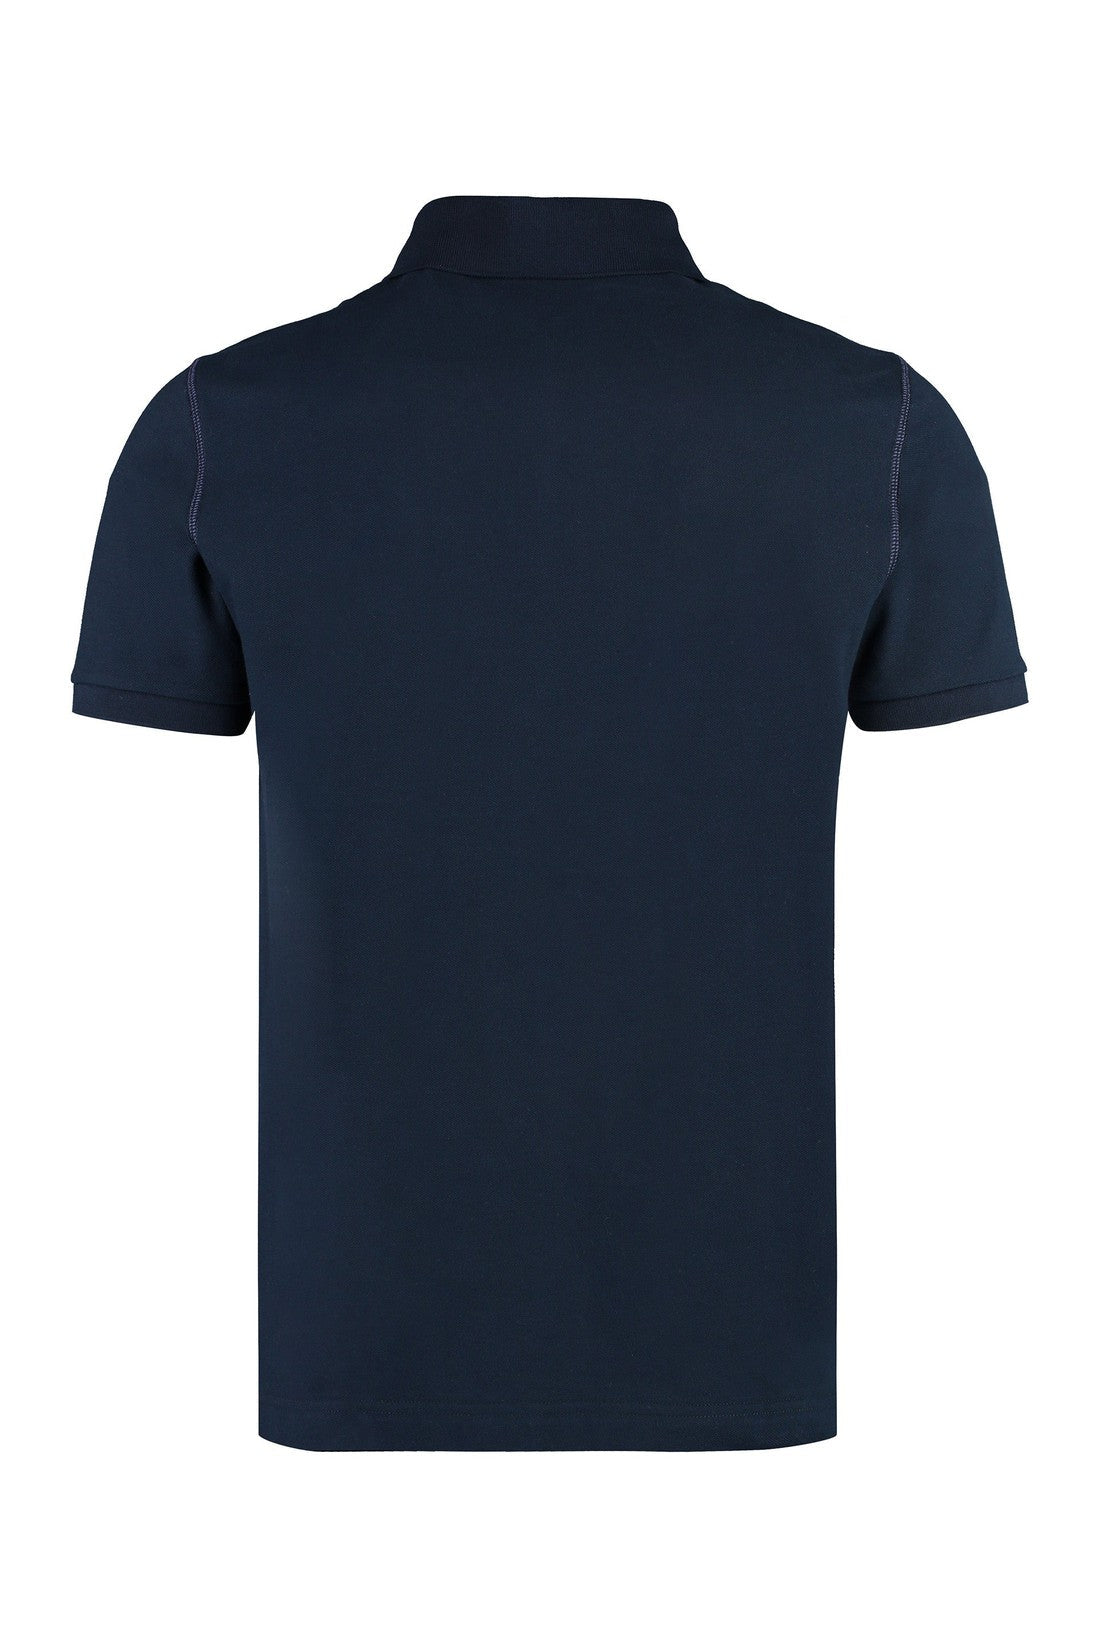 Dolce & Gabbana-OUTLET-SALE-Short sleeve cotton polo shirt-ARCHIVIST